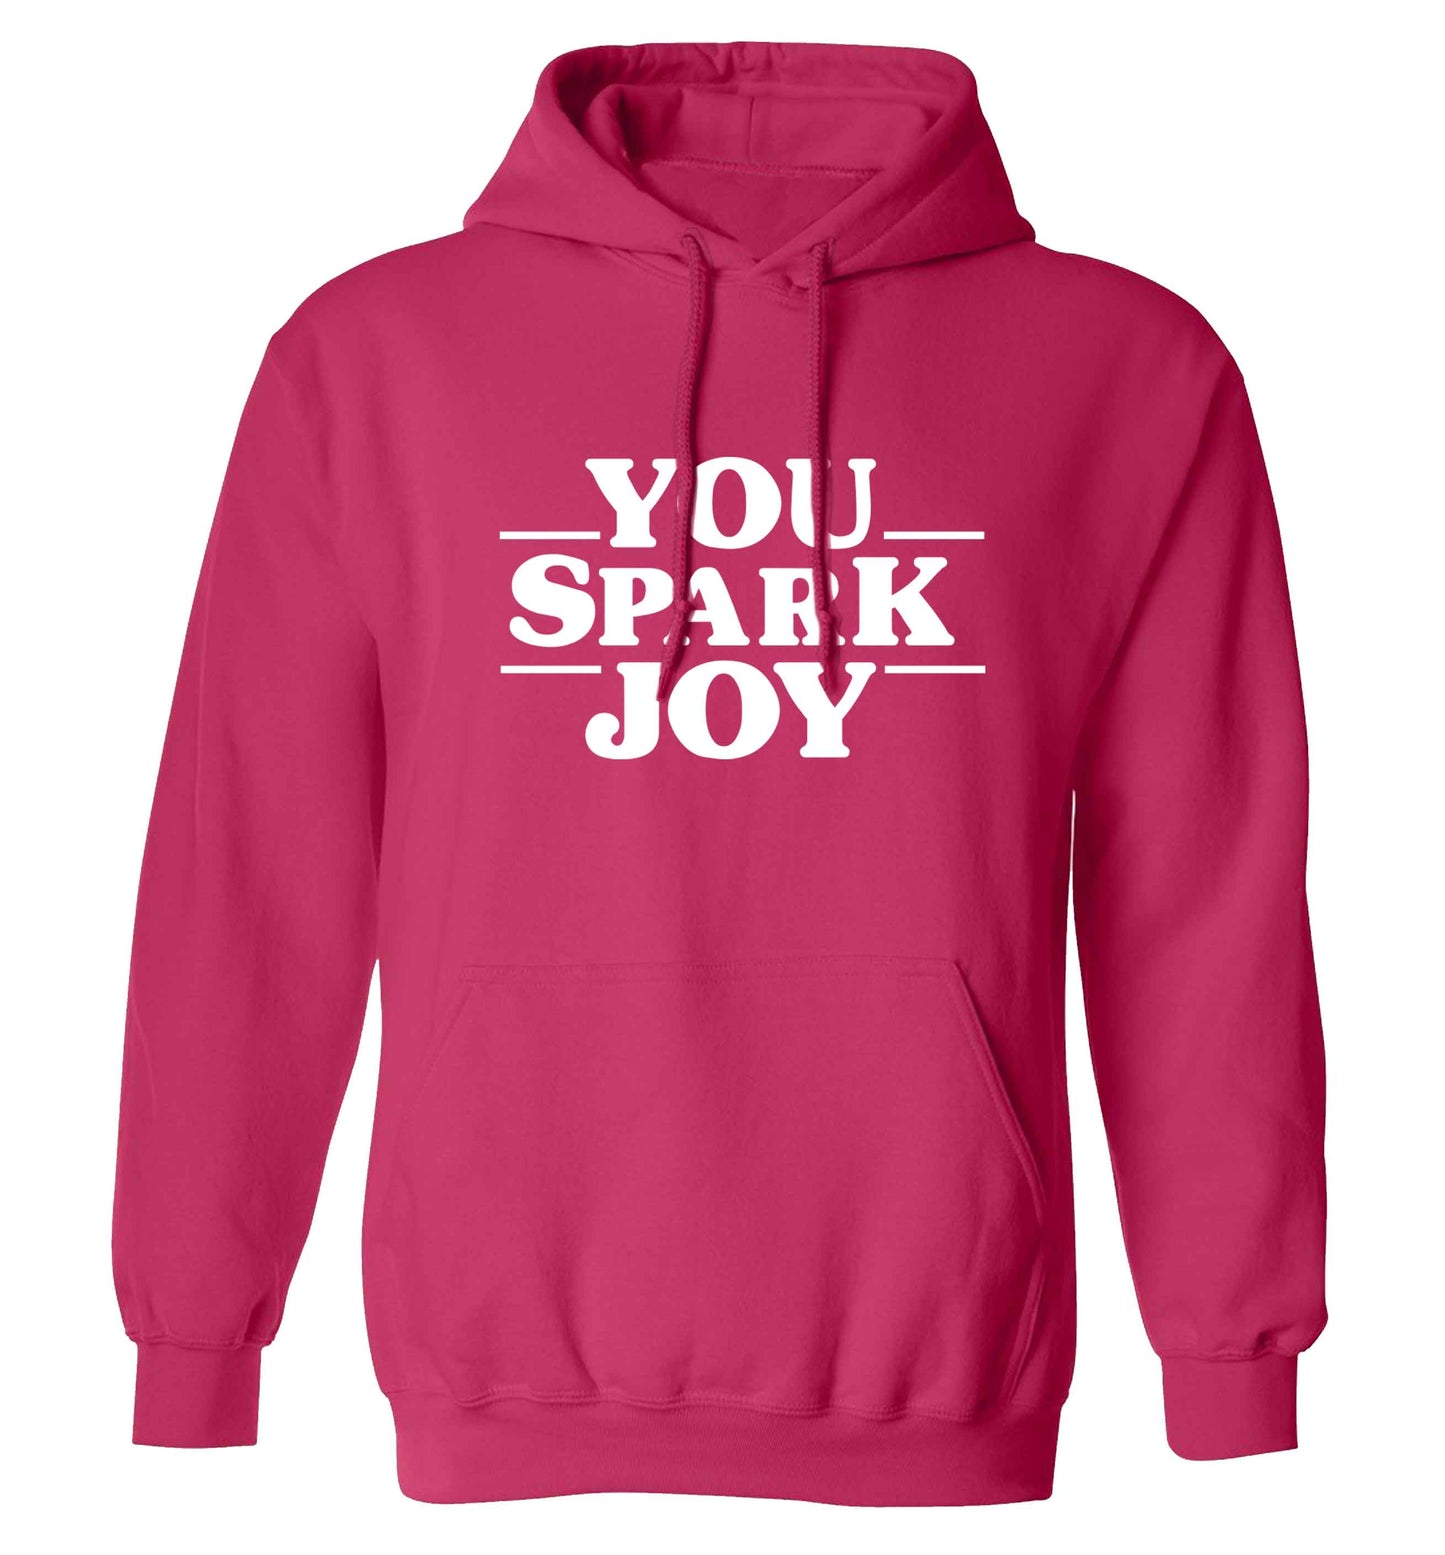 You spark joy adults unisex pink hoodie 2XL